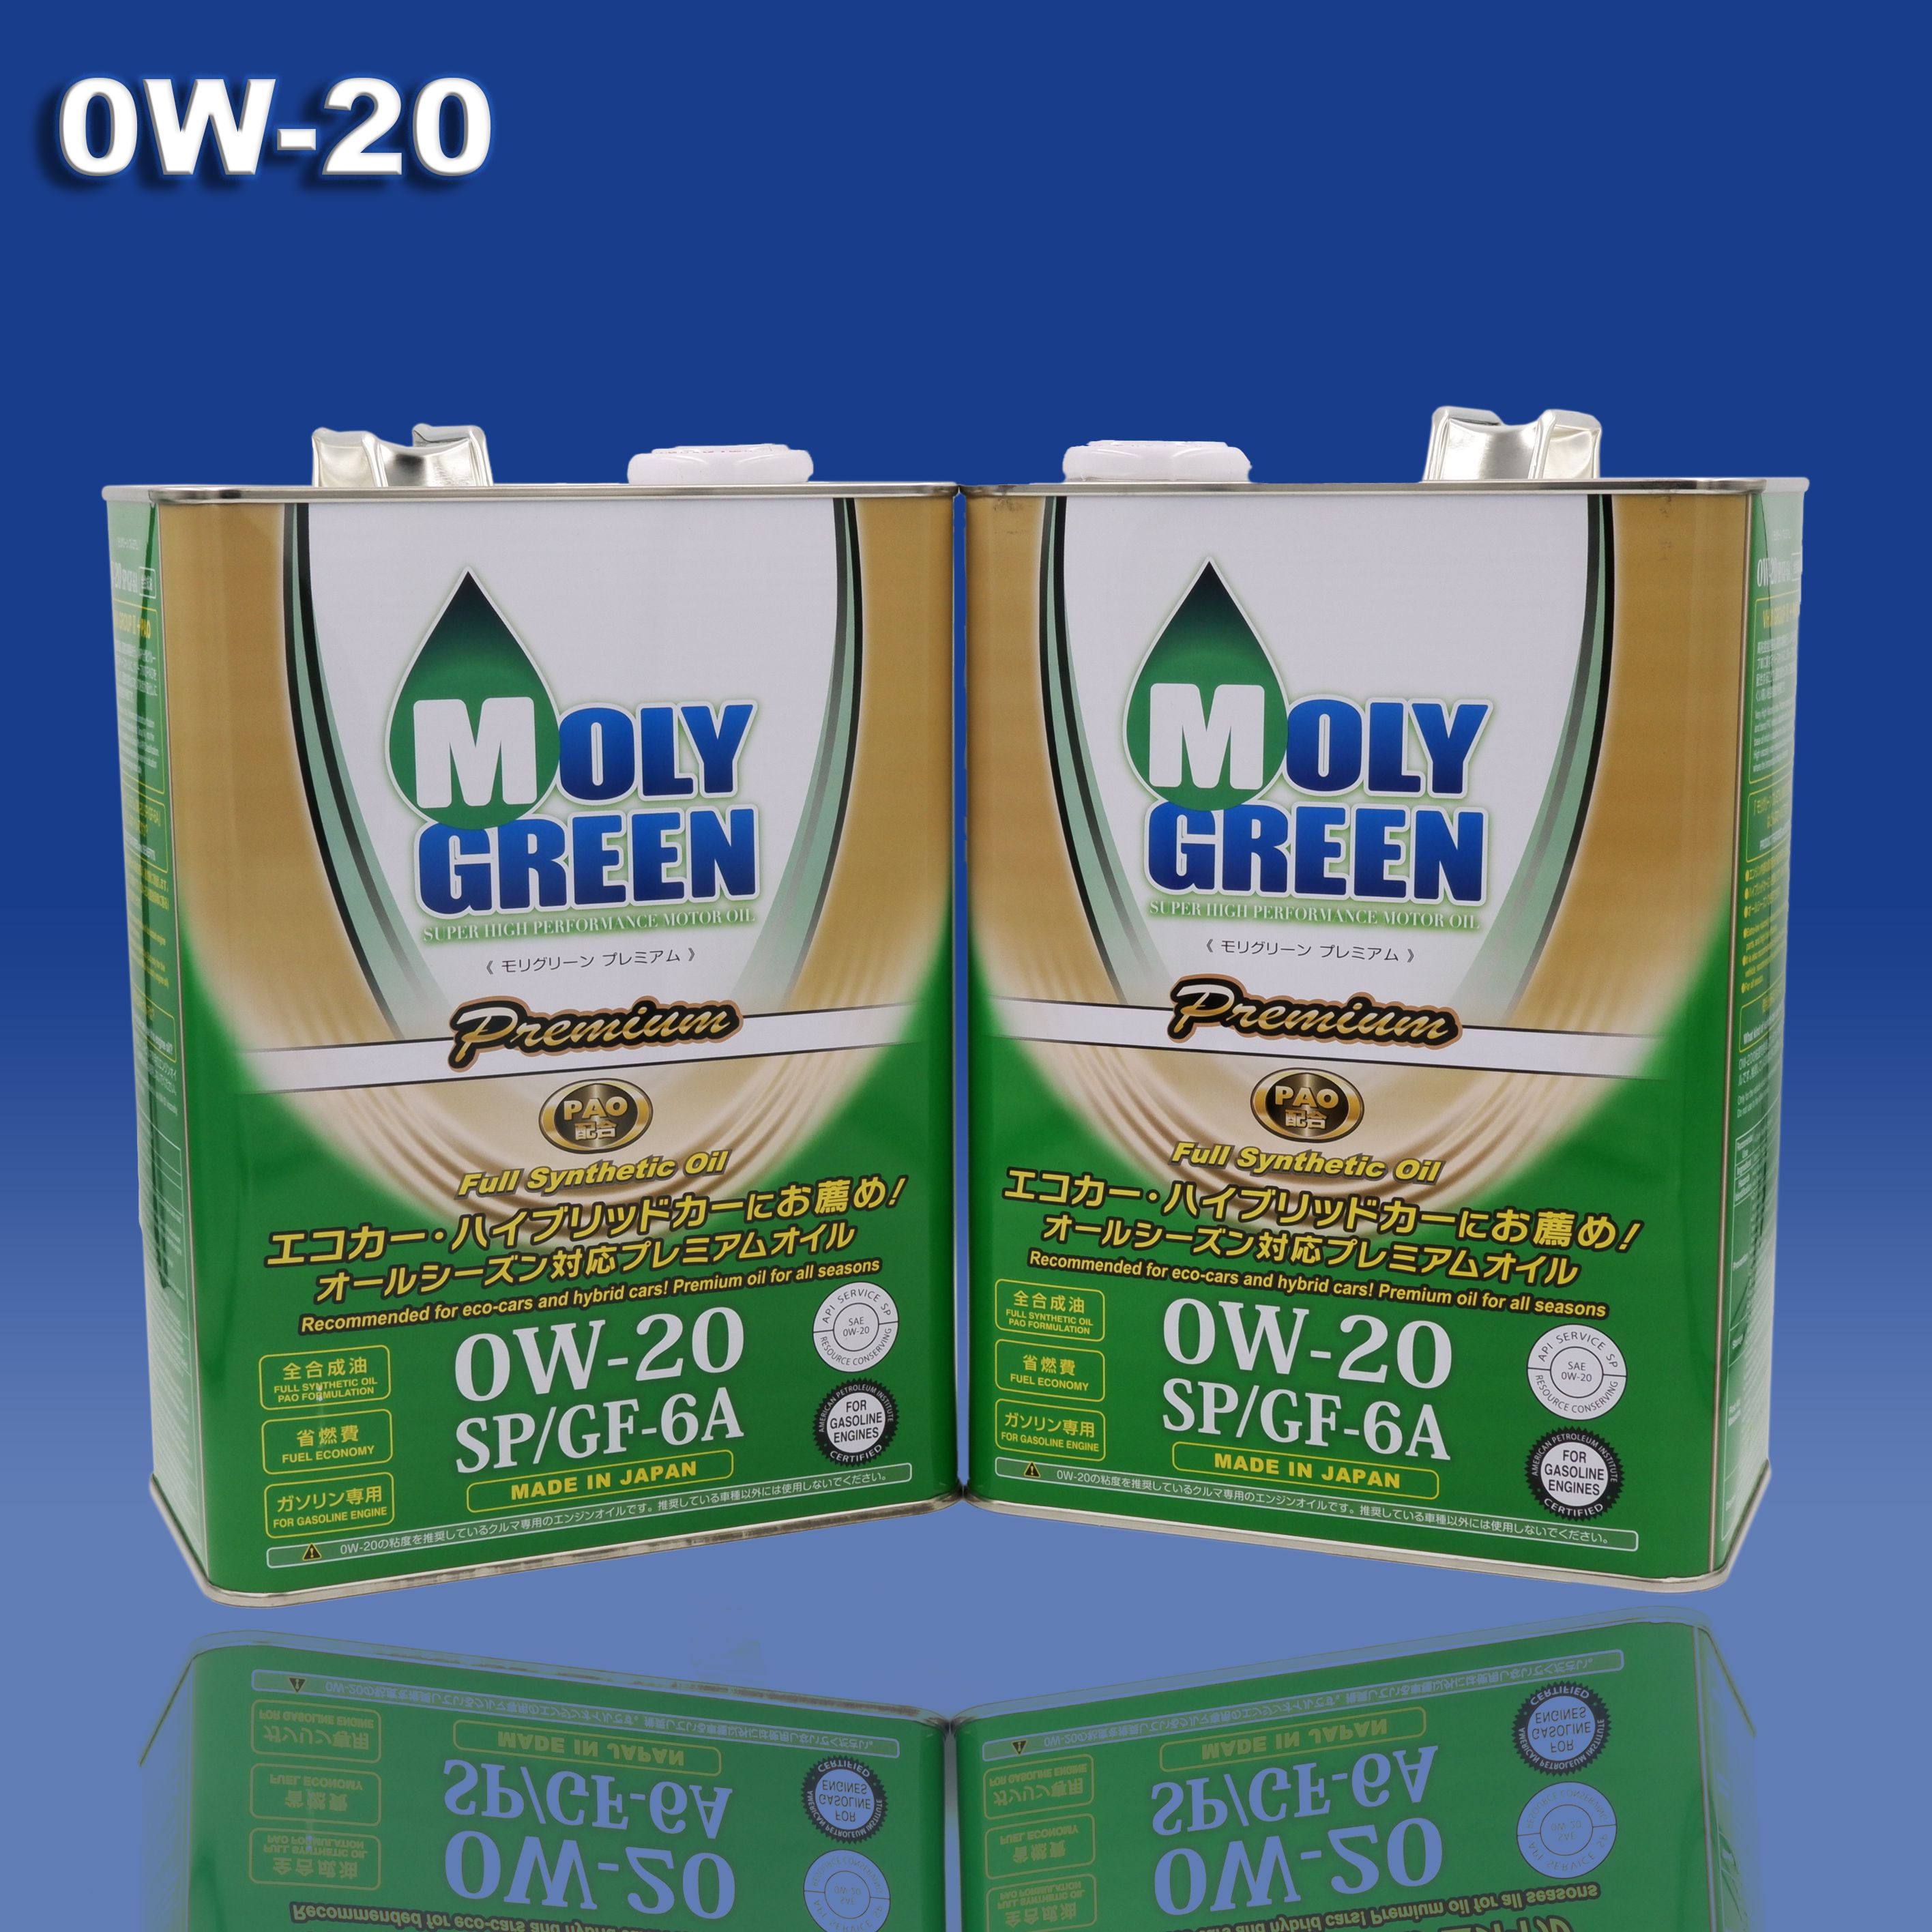 Moly Green 0w20 Premium. Moly Green Hybrid 0w20 SP. Moly Green 0w20 артикул. MOLYGREEN Hybrid SP 0w-20, 4 л. 0470101. Отзыв масло moly green